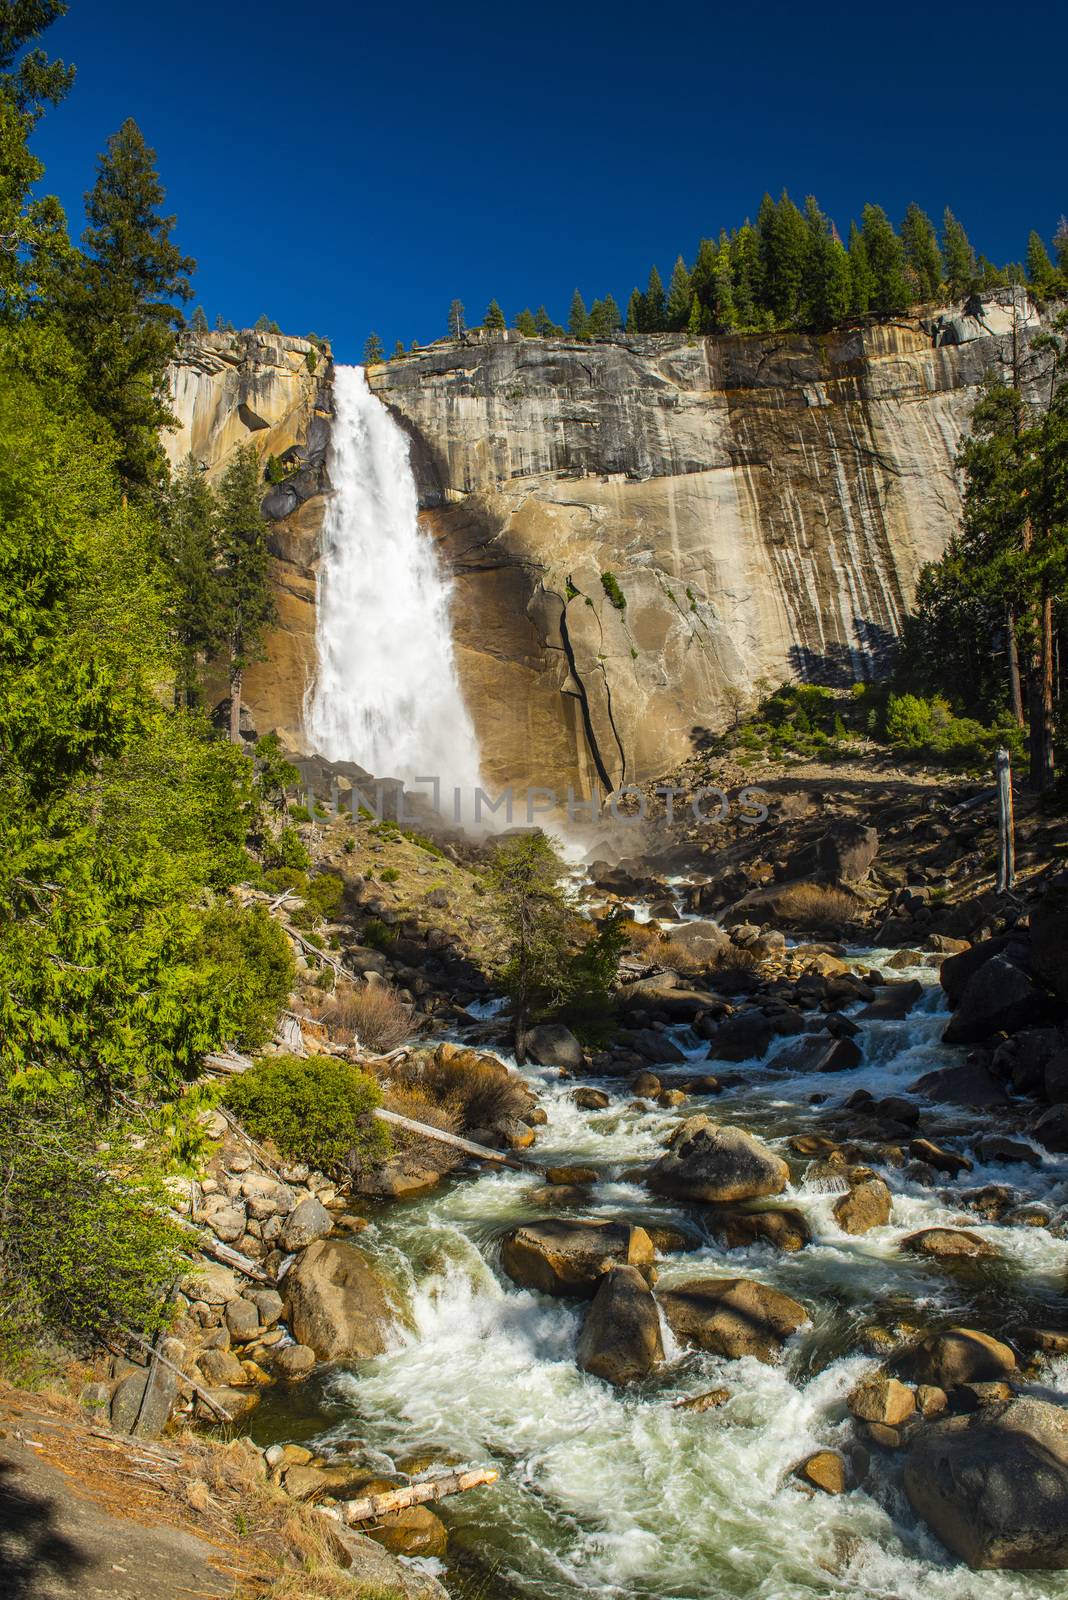 Nevada Falls in Yosemite National Park in California by fyletto